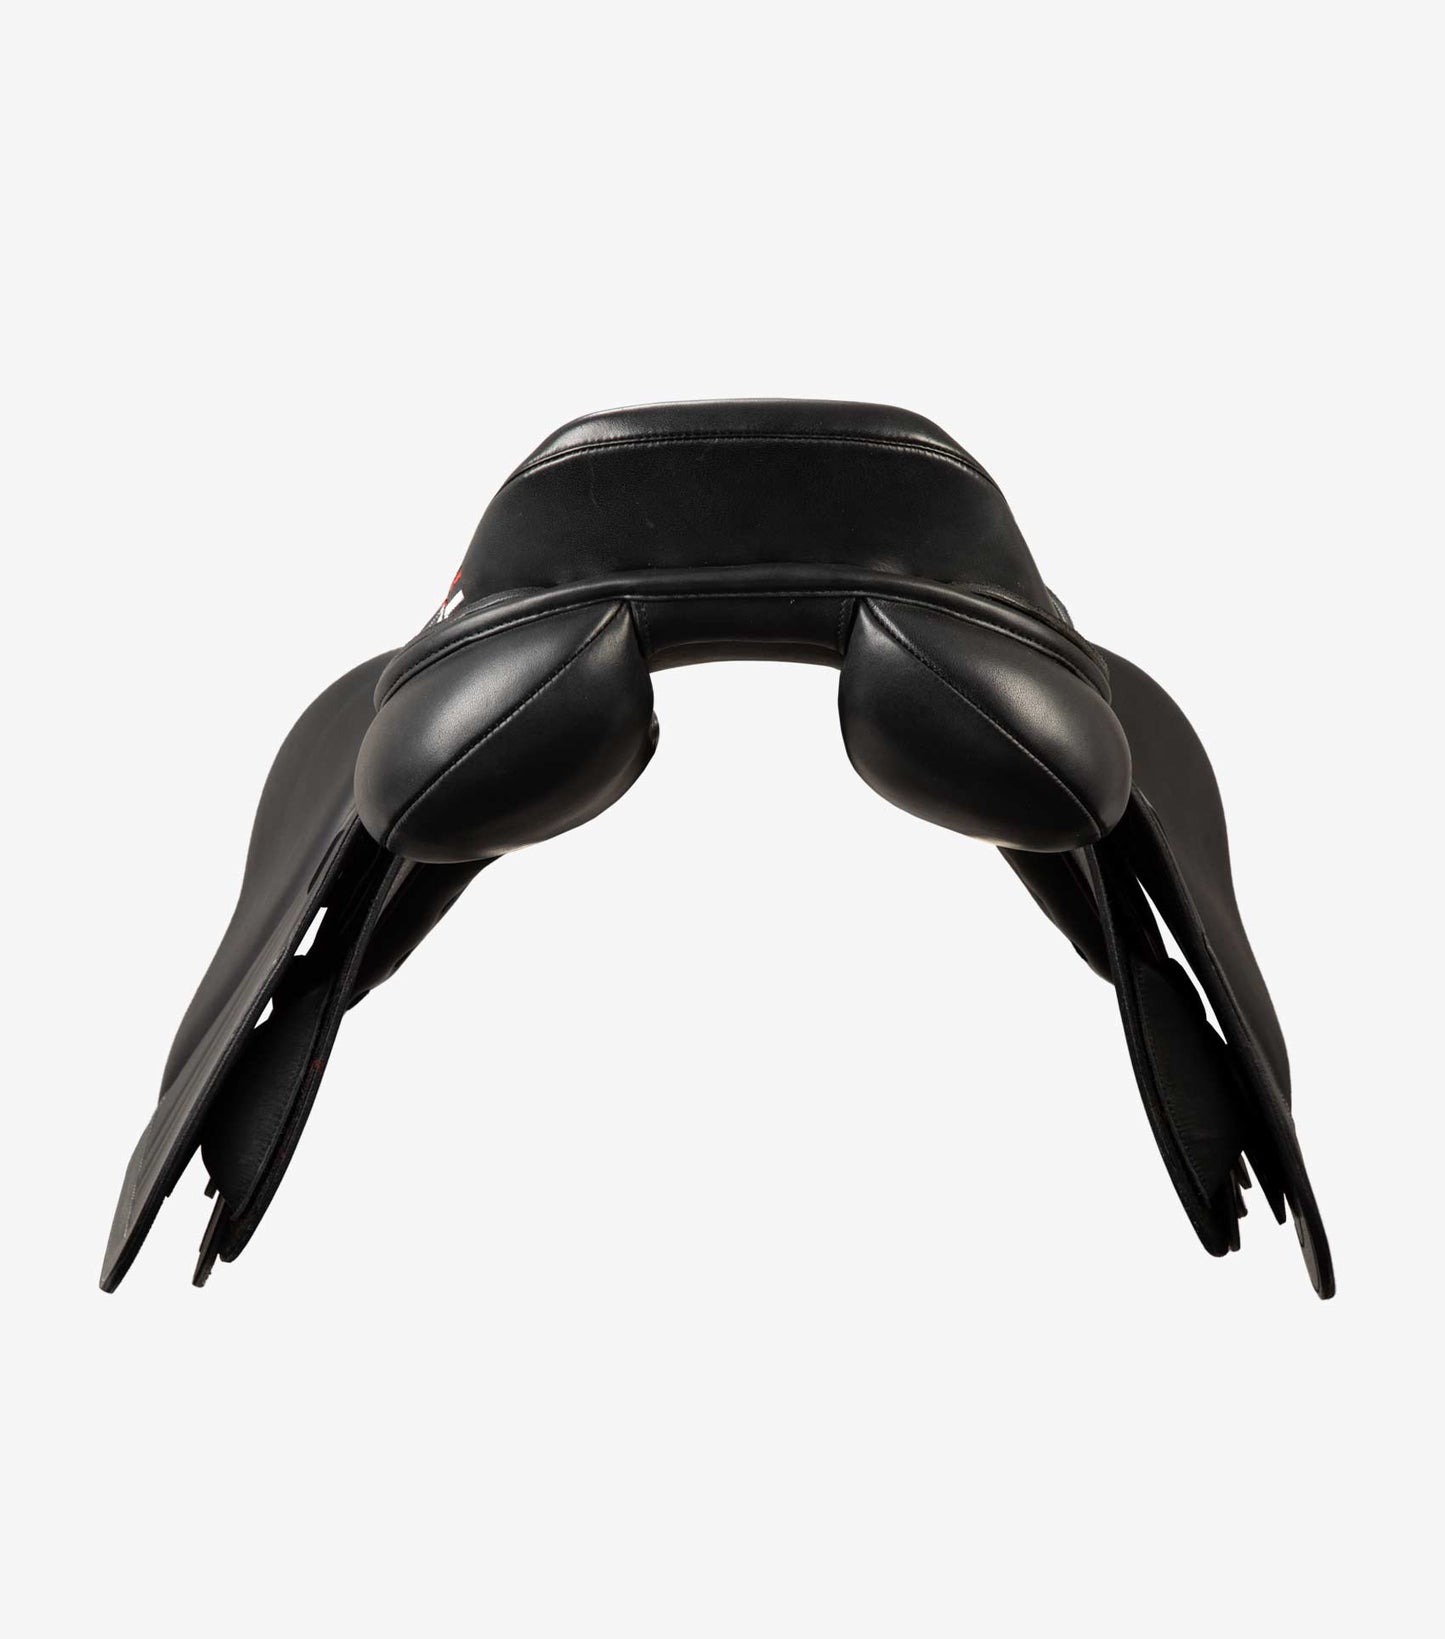 Premier Equine Chamonix Leather Close Contact Jump Saddle (Black)